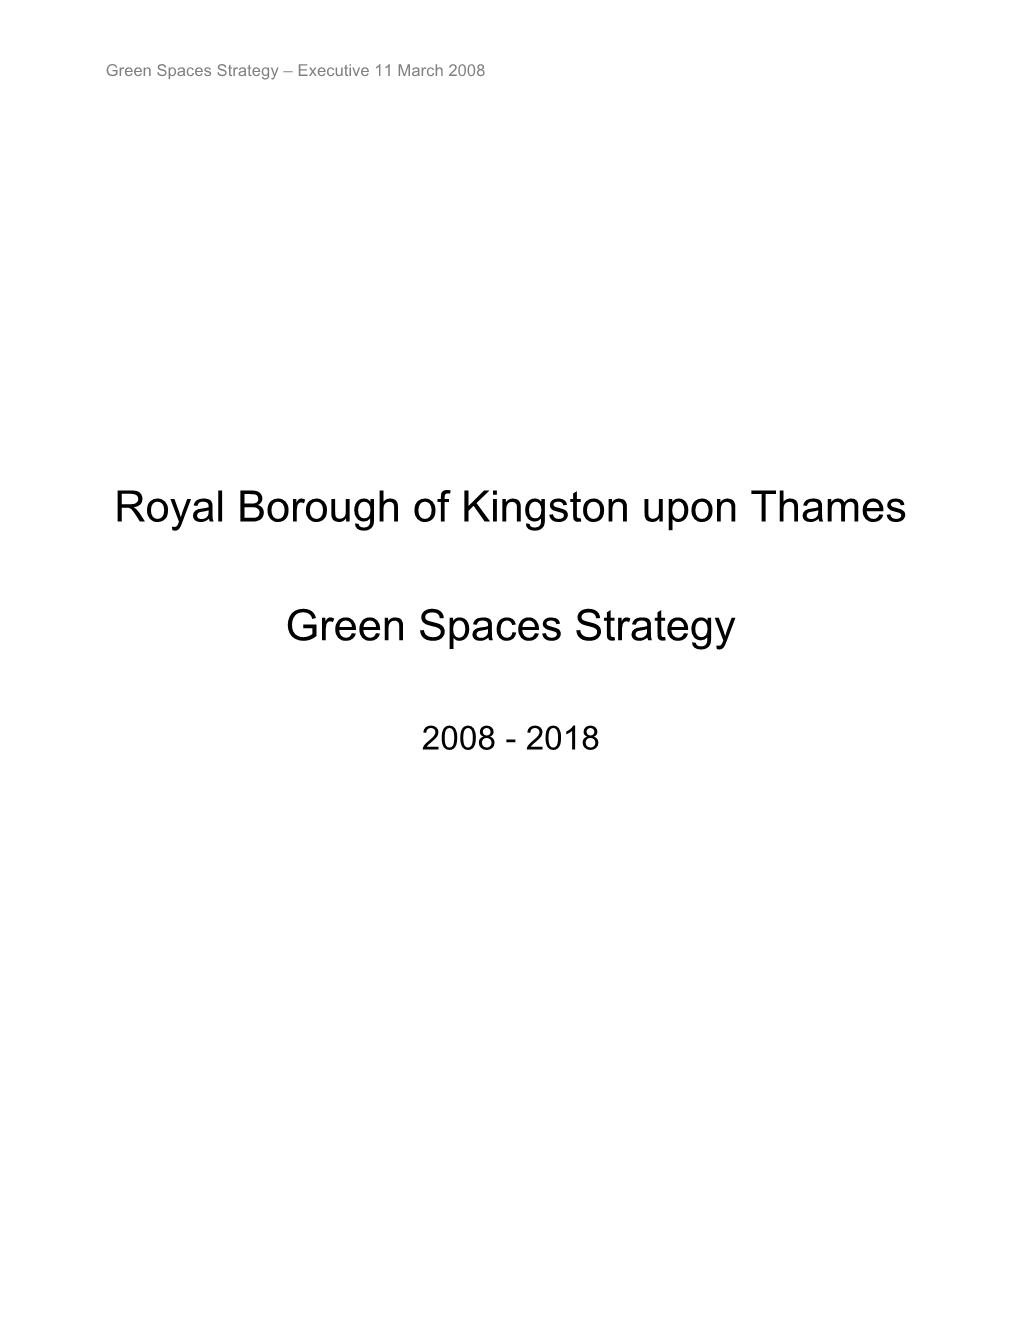 Royal Borough of Kingston Upon Thames Green Spaces Strategy 2008 - 2018